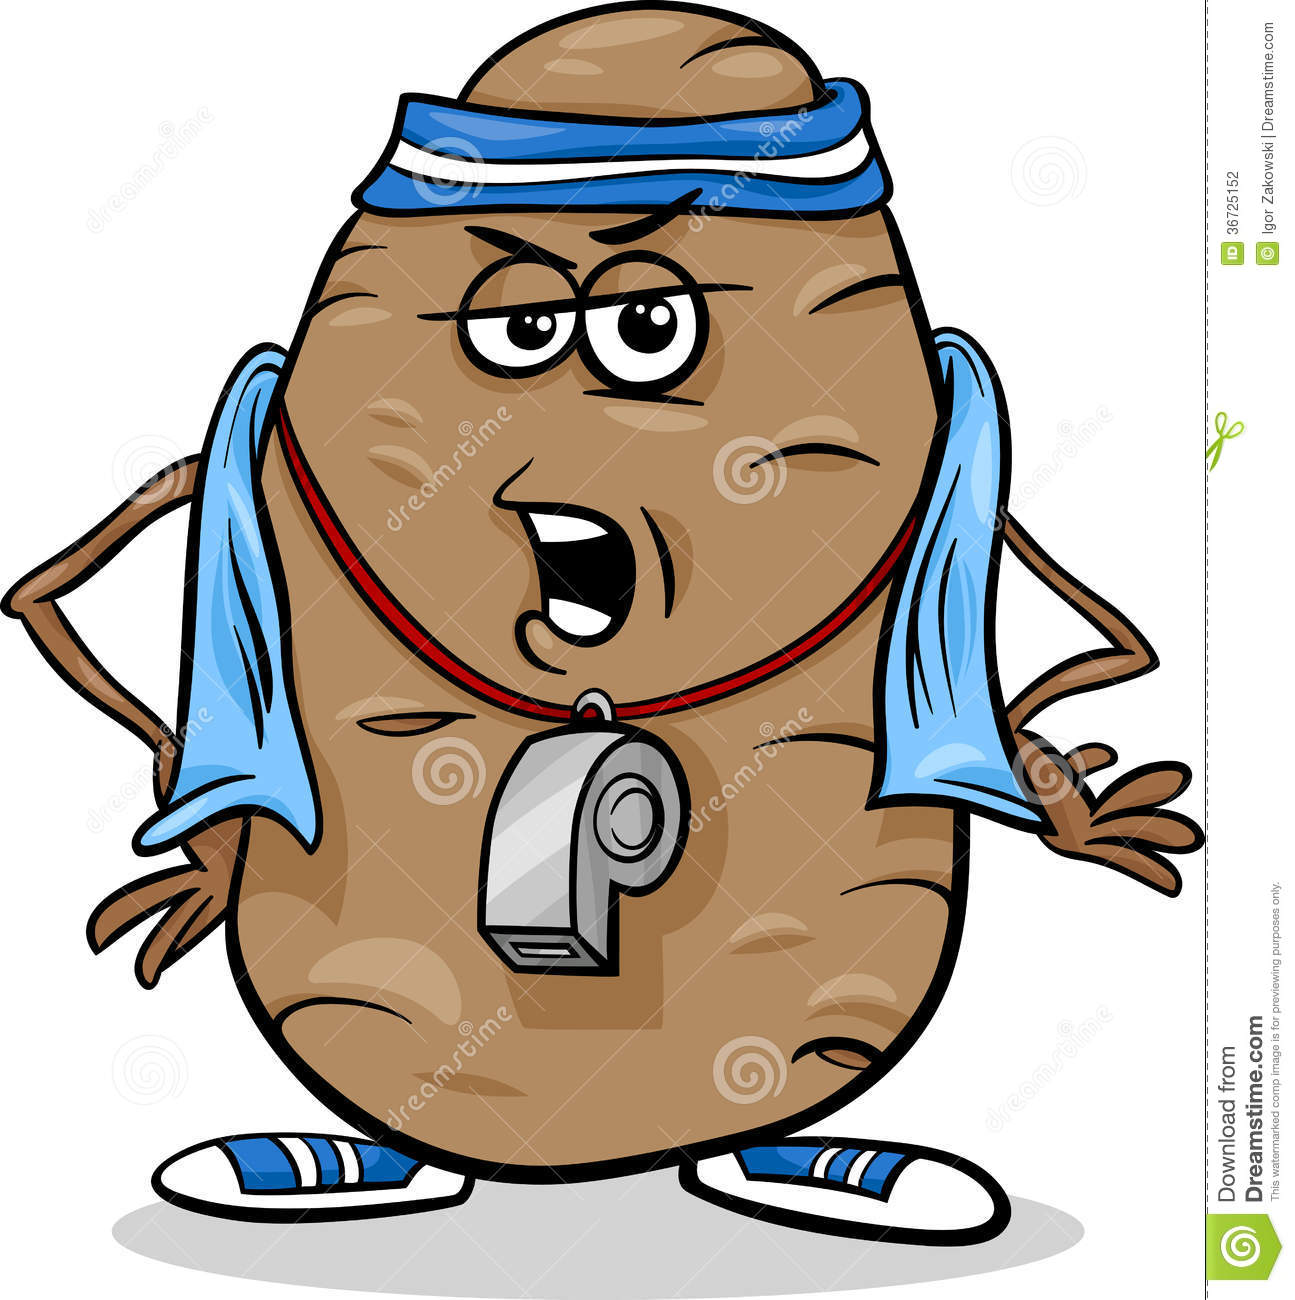 Couch Potato Saying Cartoon Stock Photography   Image  36725152